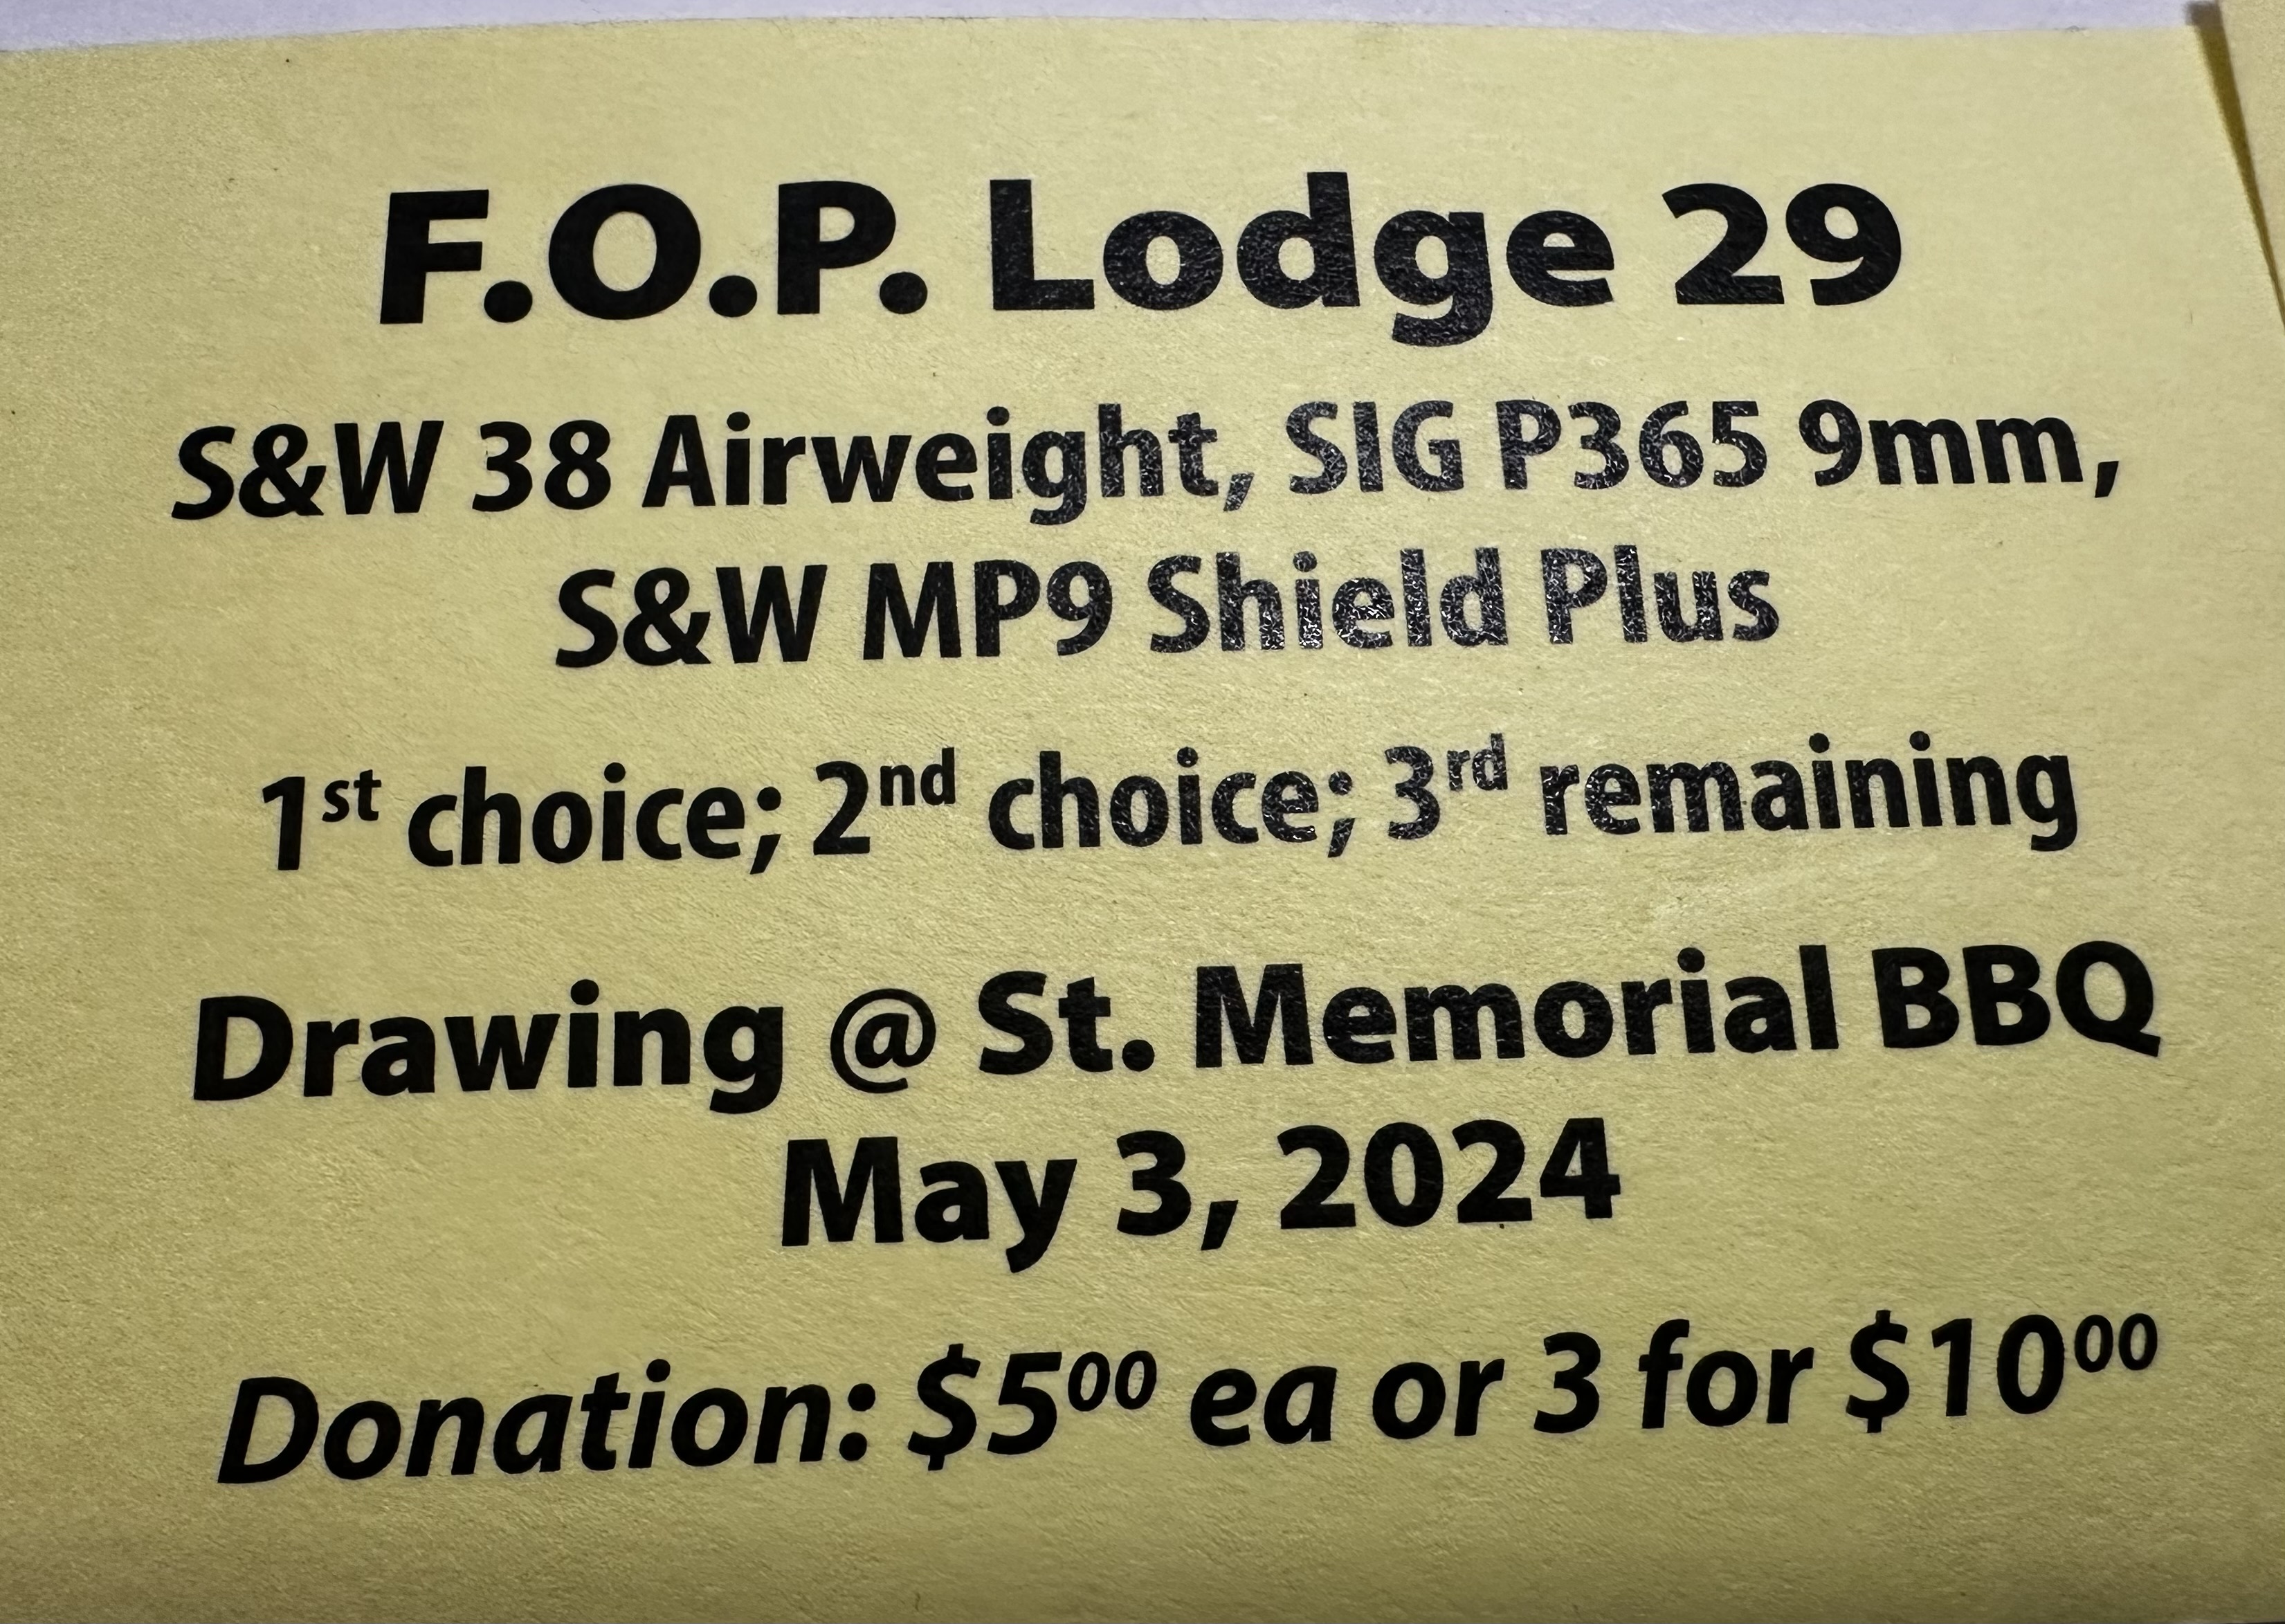 Lodge 29 BBQ gun raffle/donation